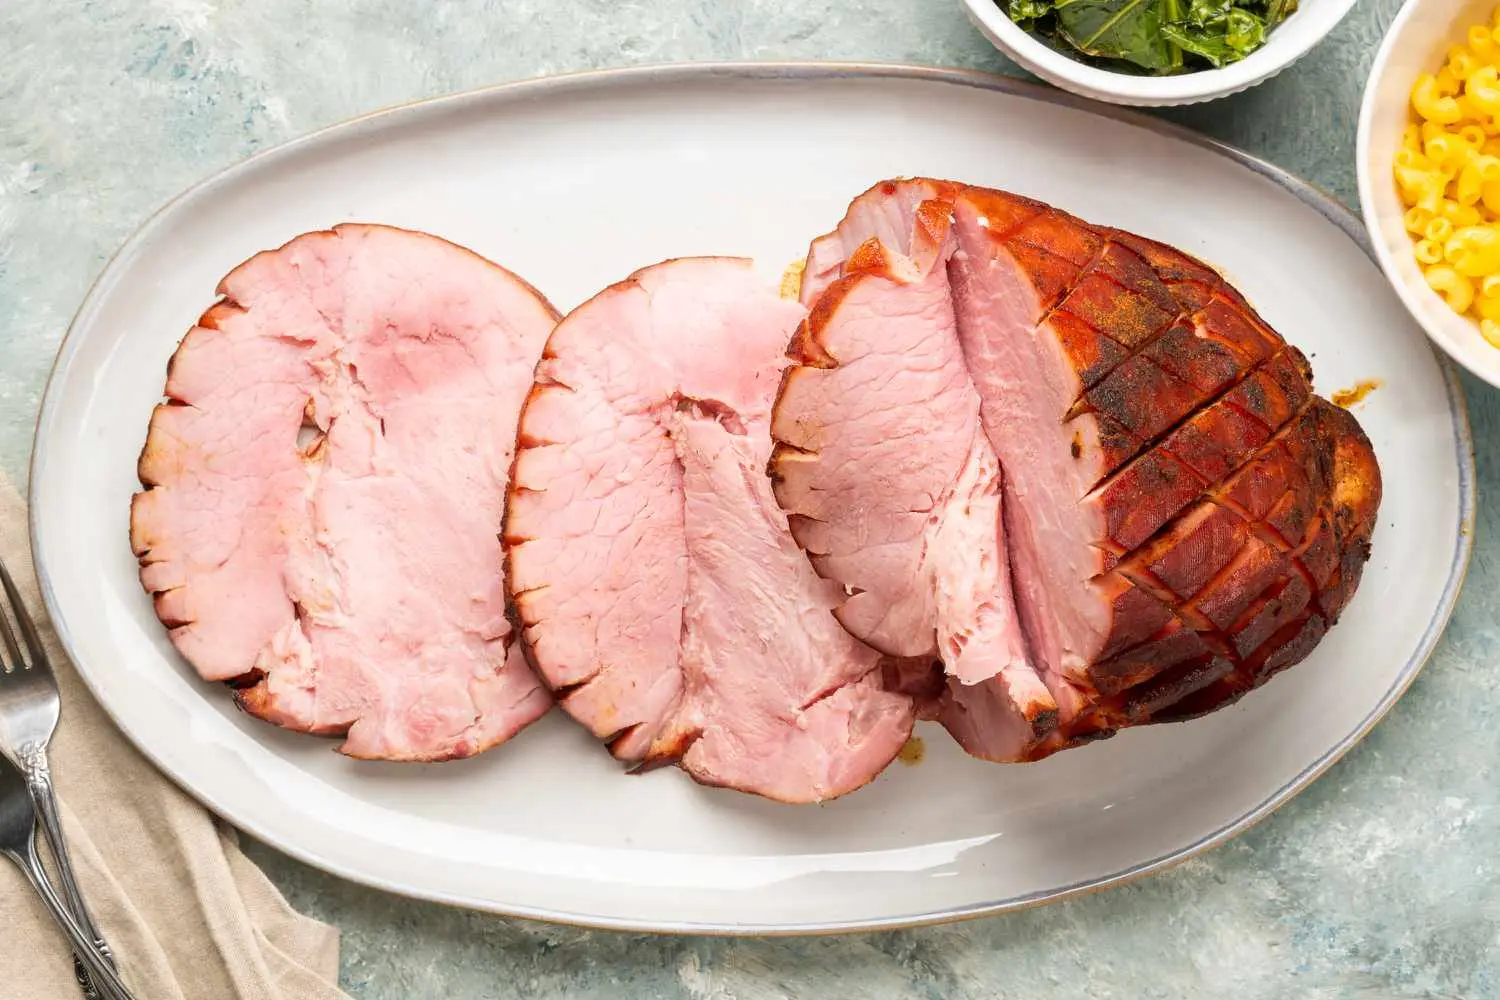 smoked ham marinade - Should you marinate ham the night before